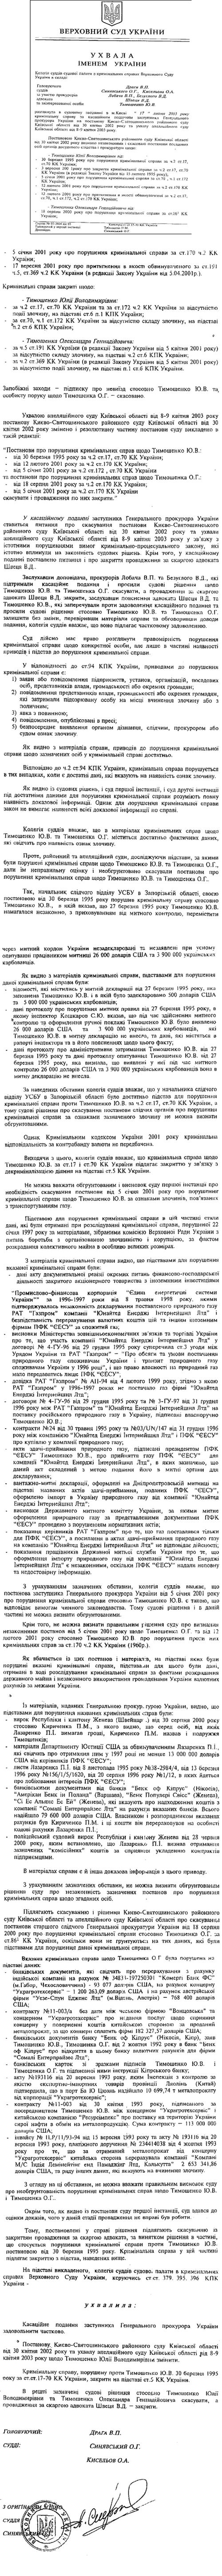 Sud zakrytie dela timoshenko 2003.jpg